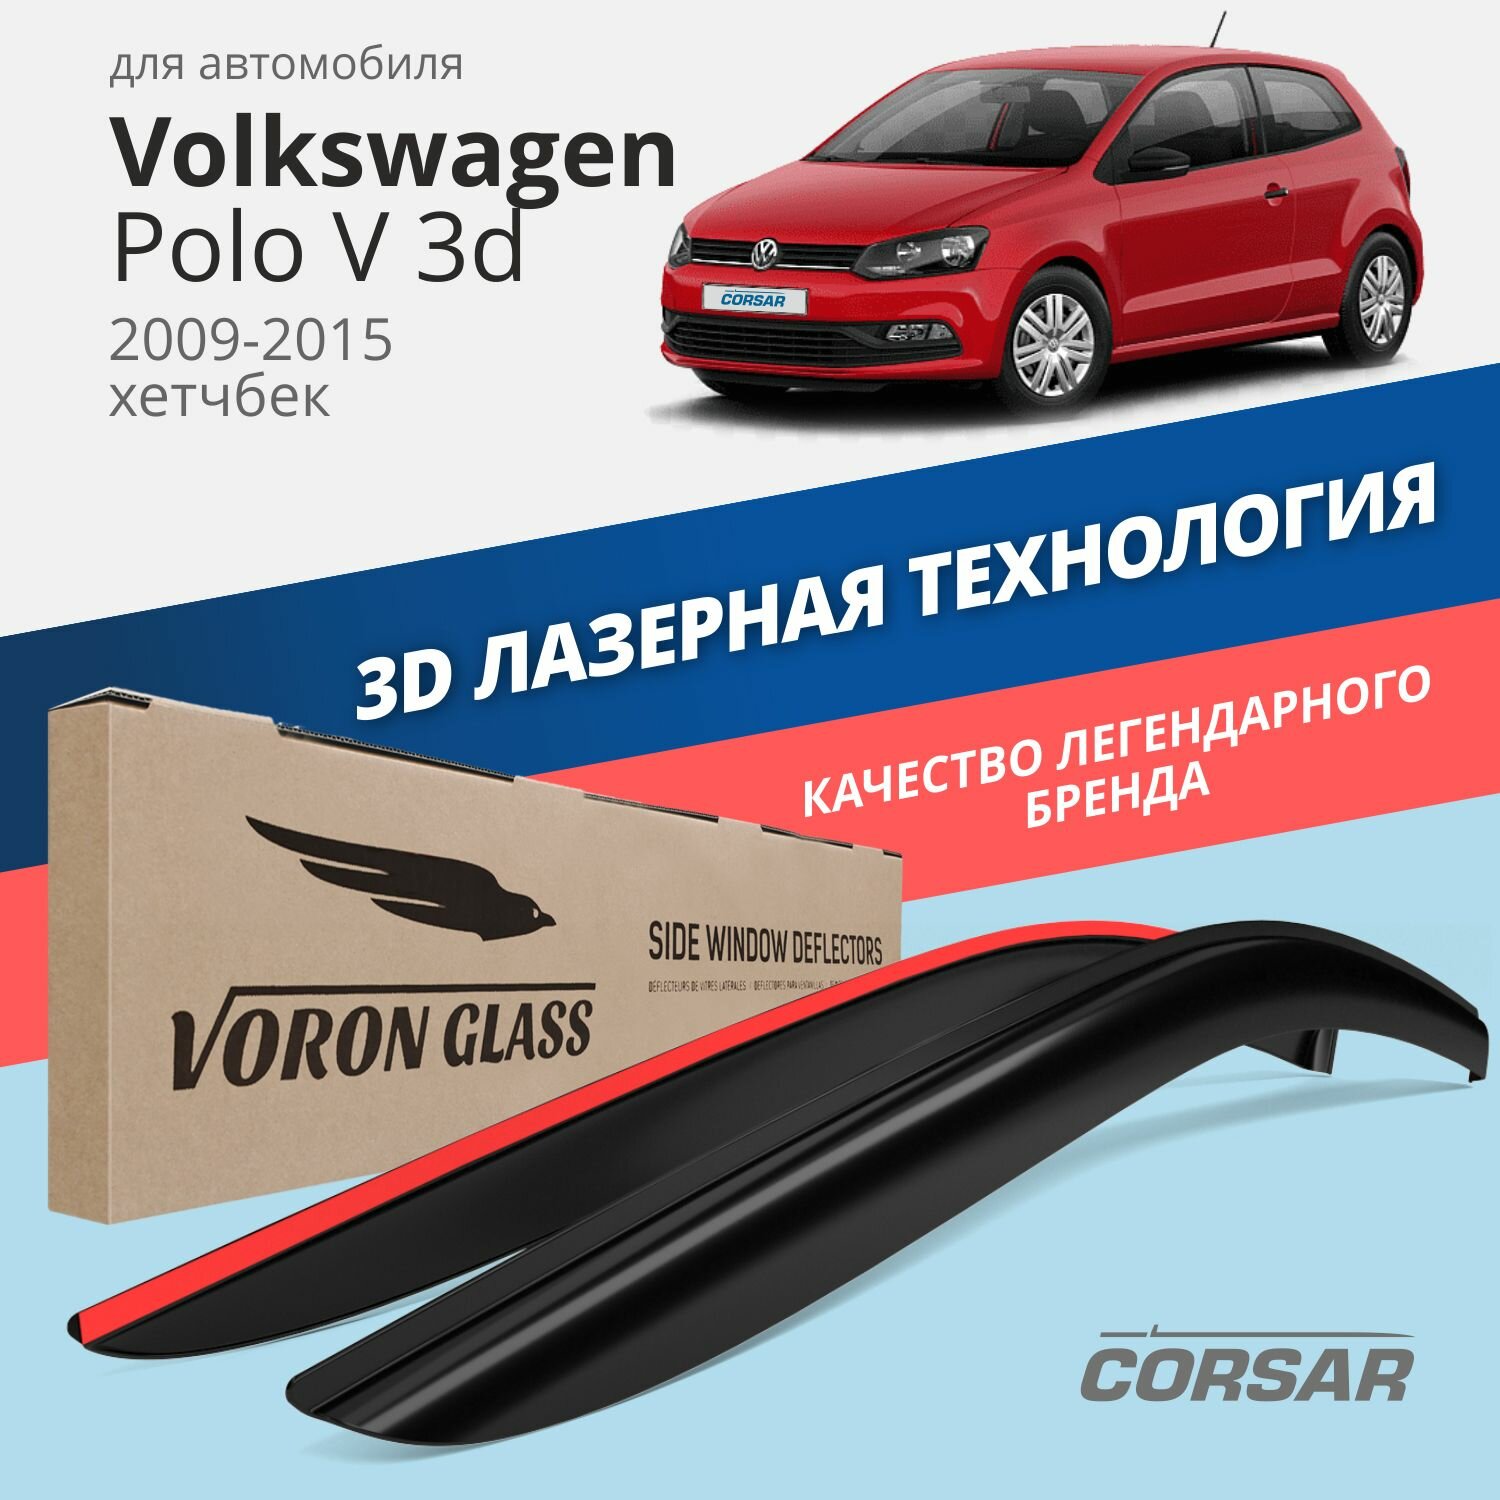 Дефлекторы окон Voron Glass серия Corsar для Volkswagen Polo V 3d 2009-2015 /хетчбек накладные 2 шт.